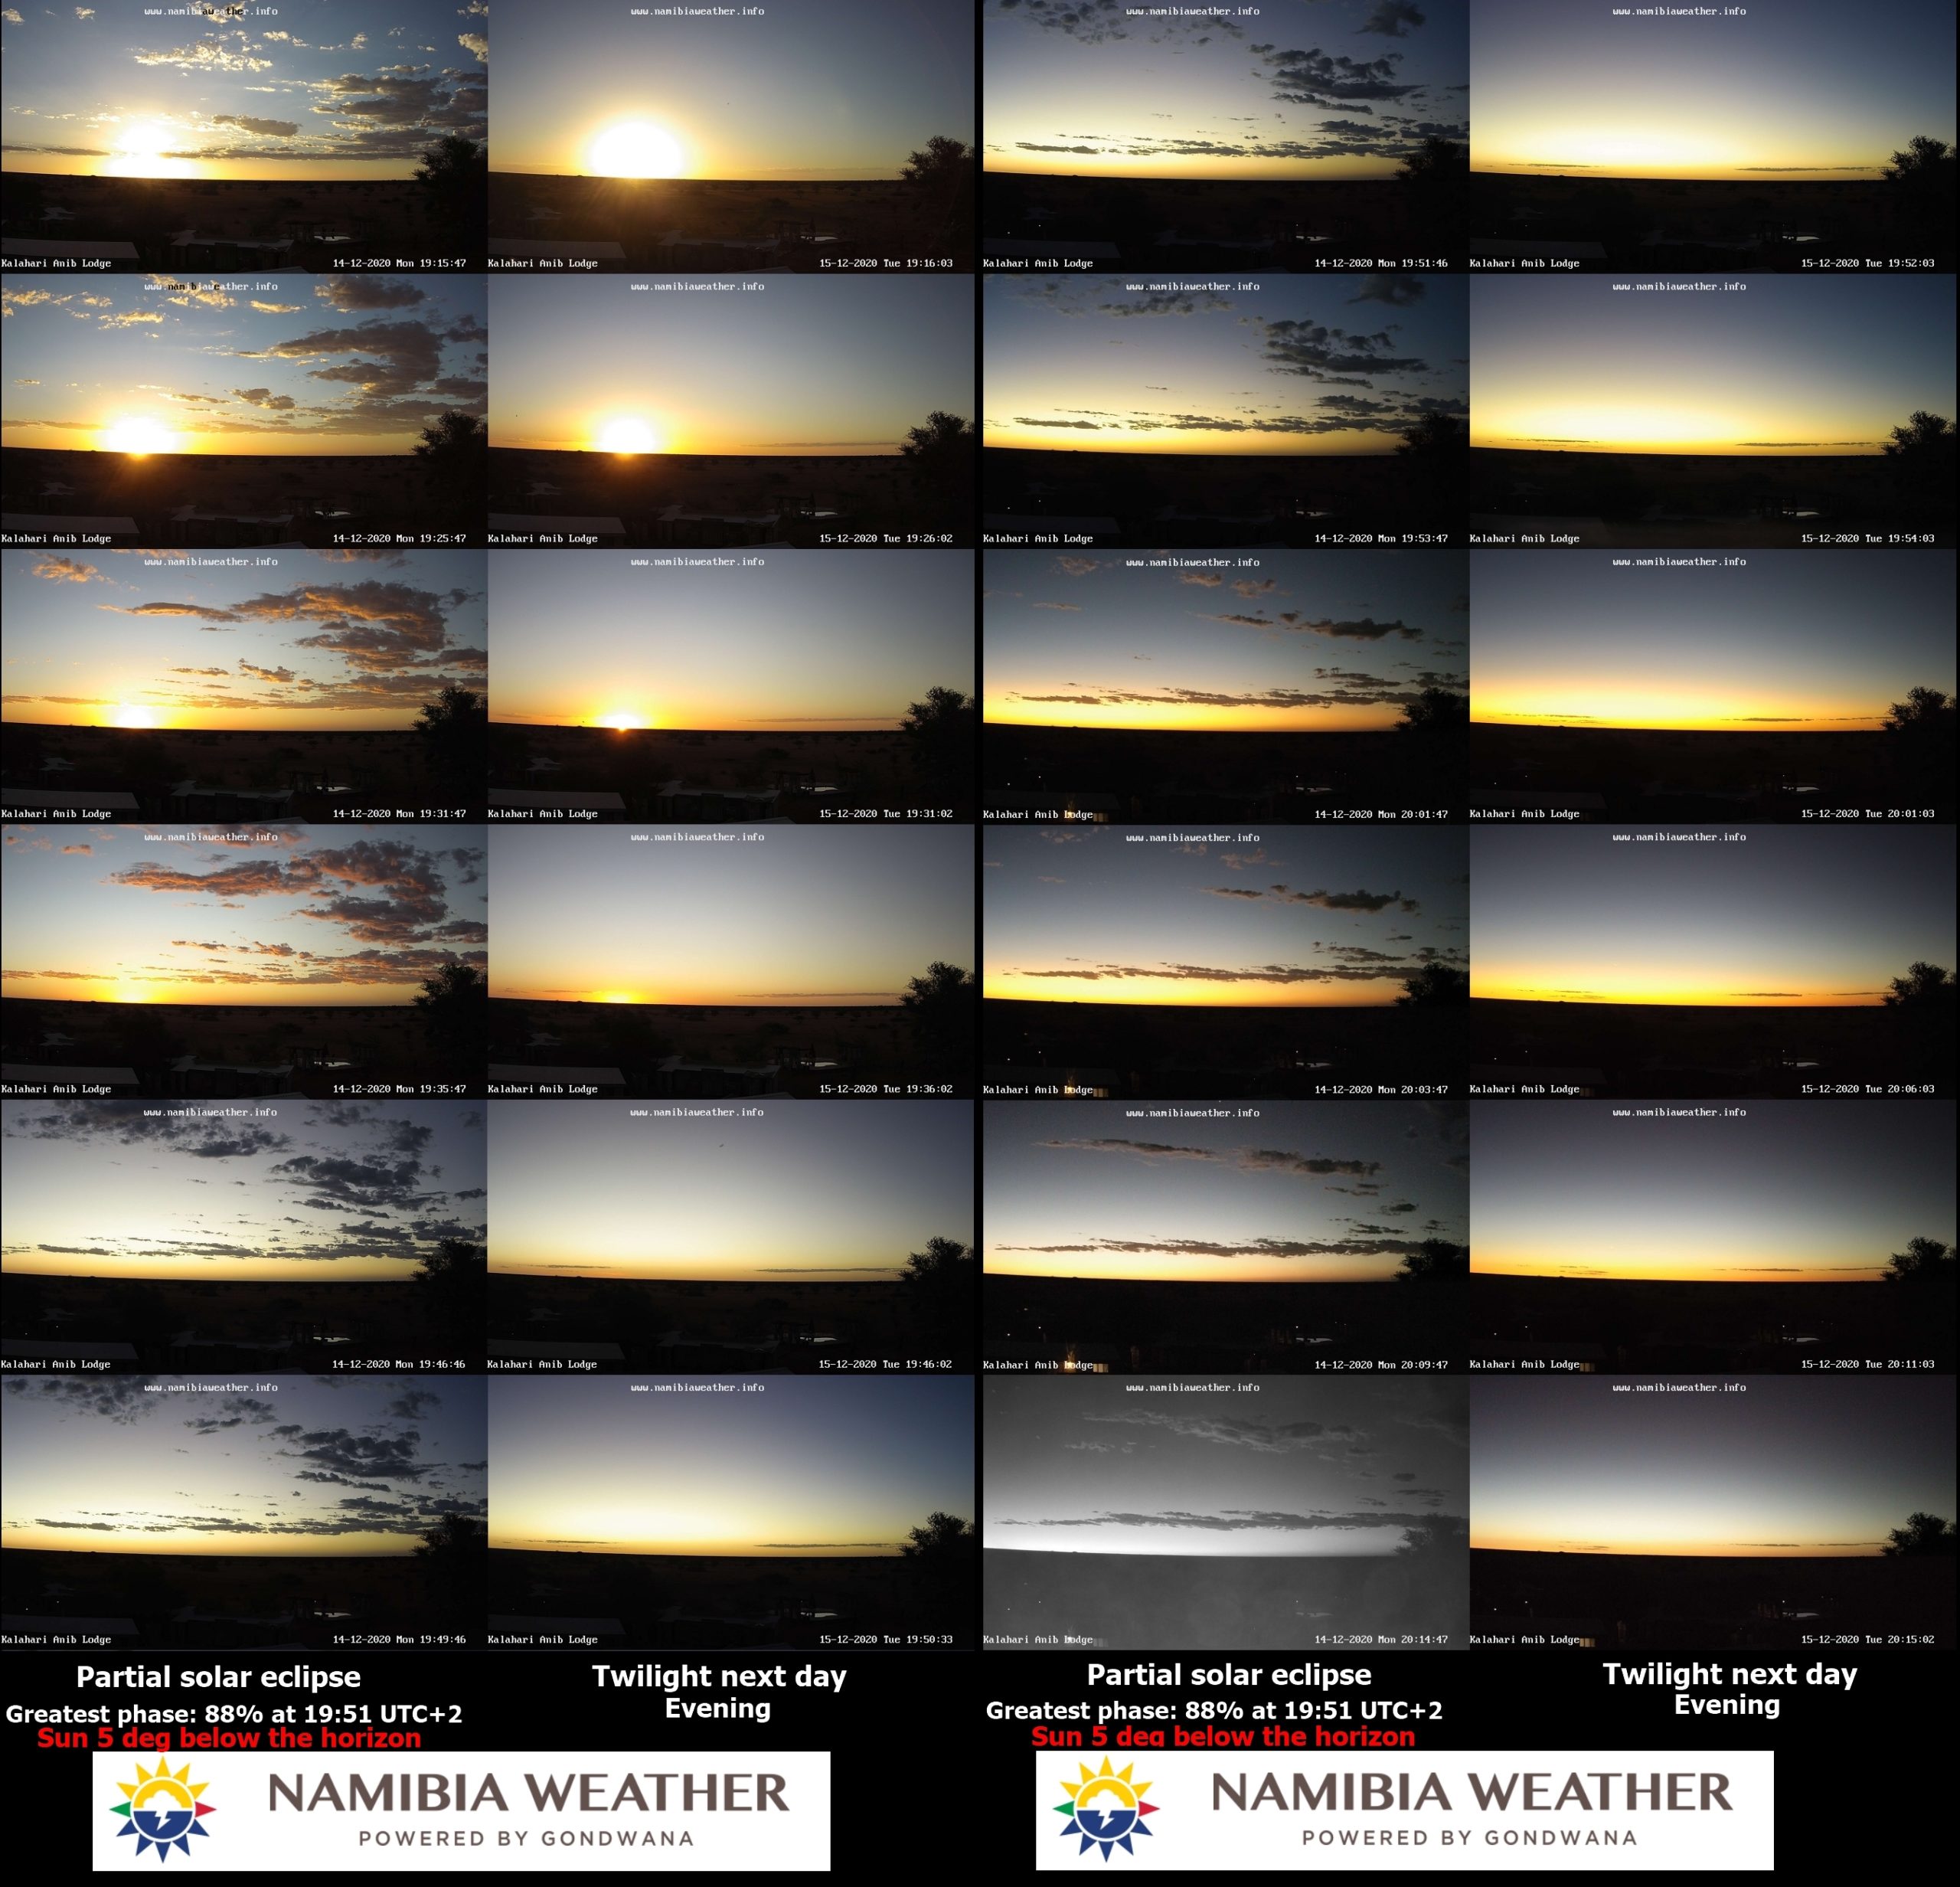 Gondwana Kalahari Anib, solar eclipse below the horizon Dec, 2020